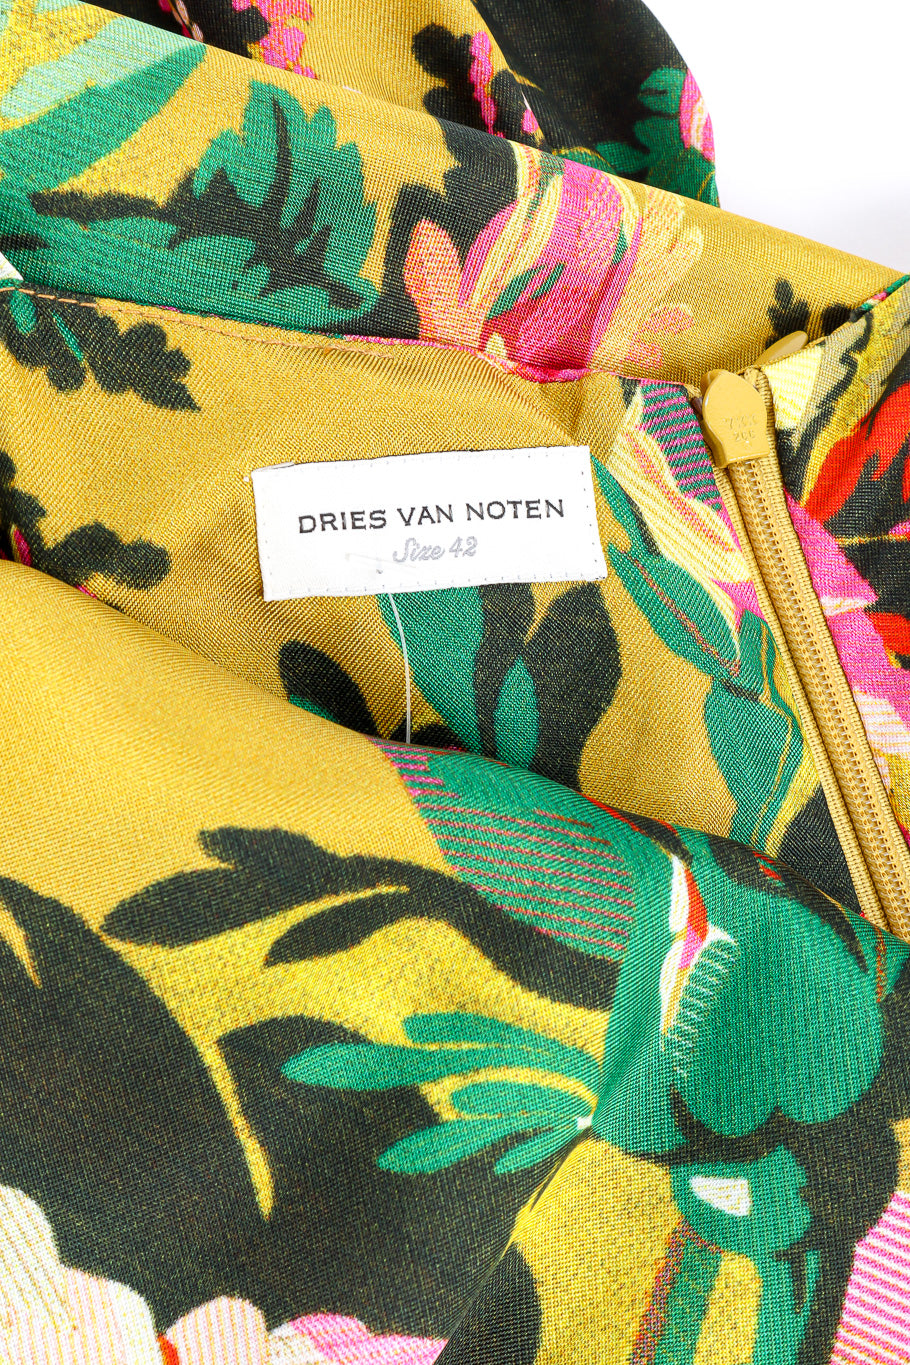 Floral ruffle hem sundress by Dries Van Noten label @recessla